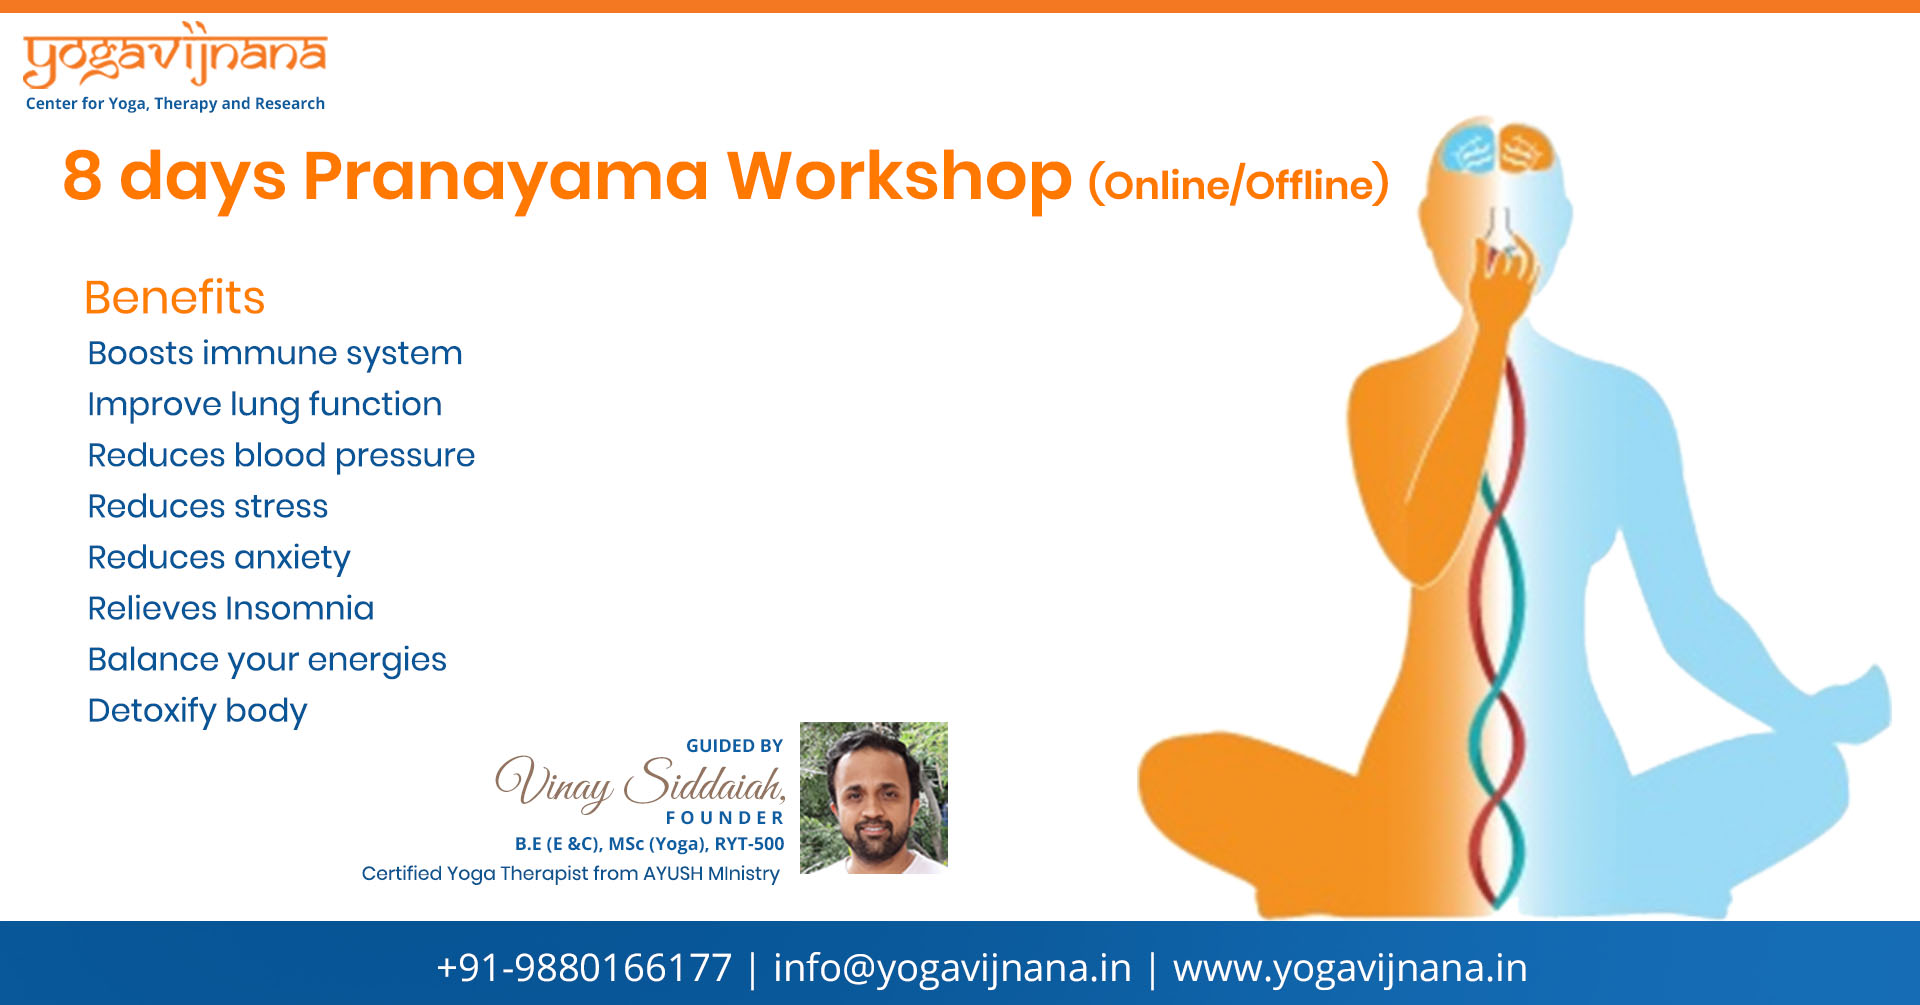 Pranayama Workshop by Yogavijnana